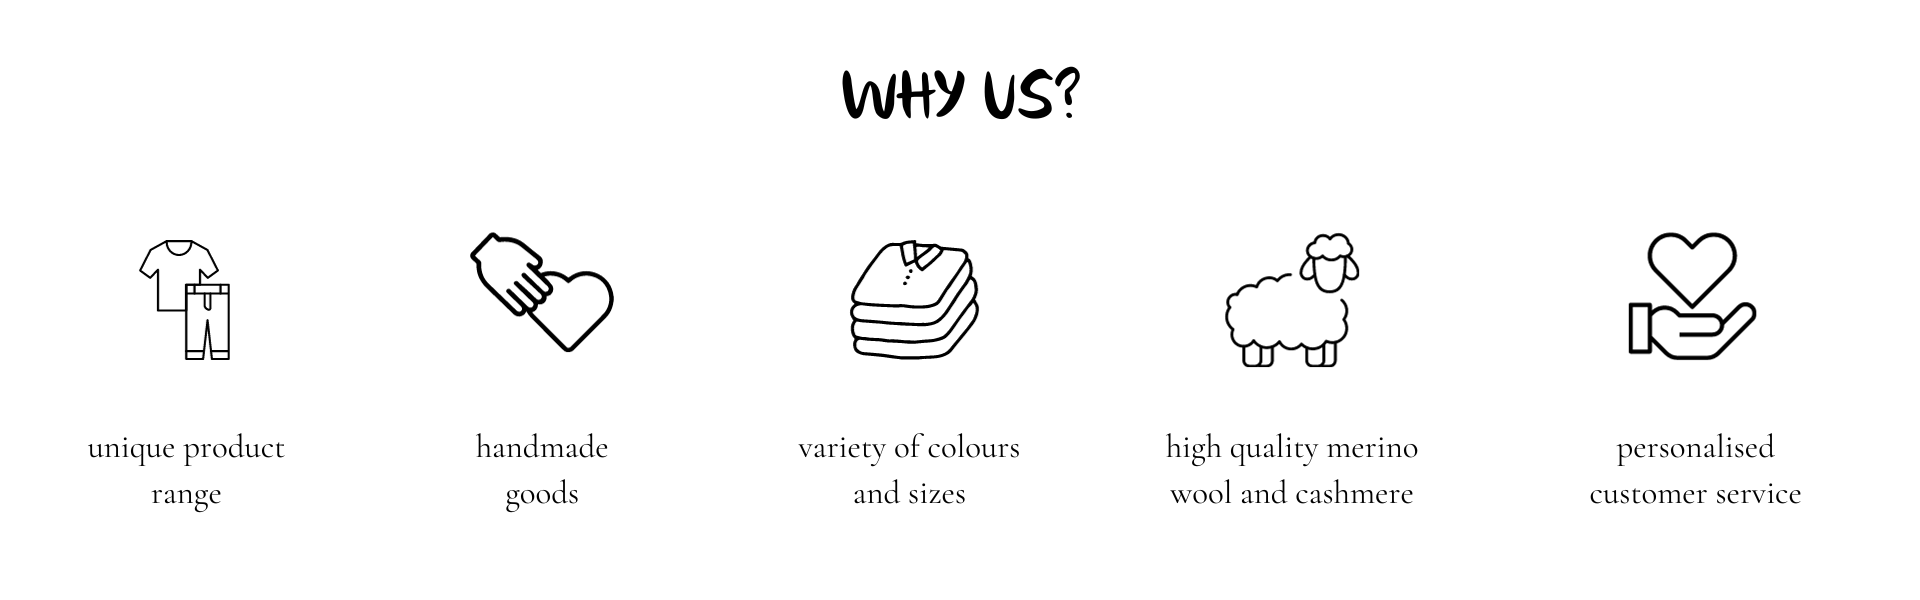 Why us image